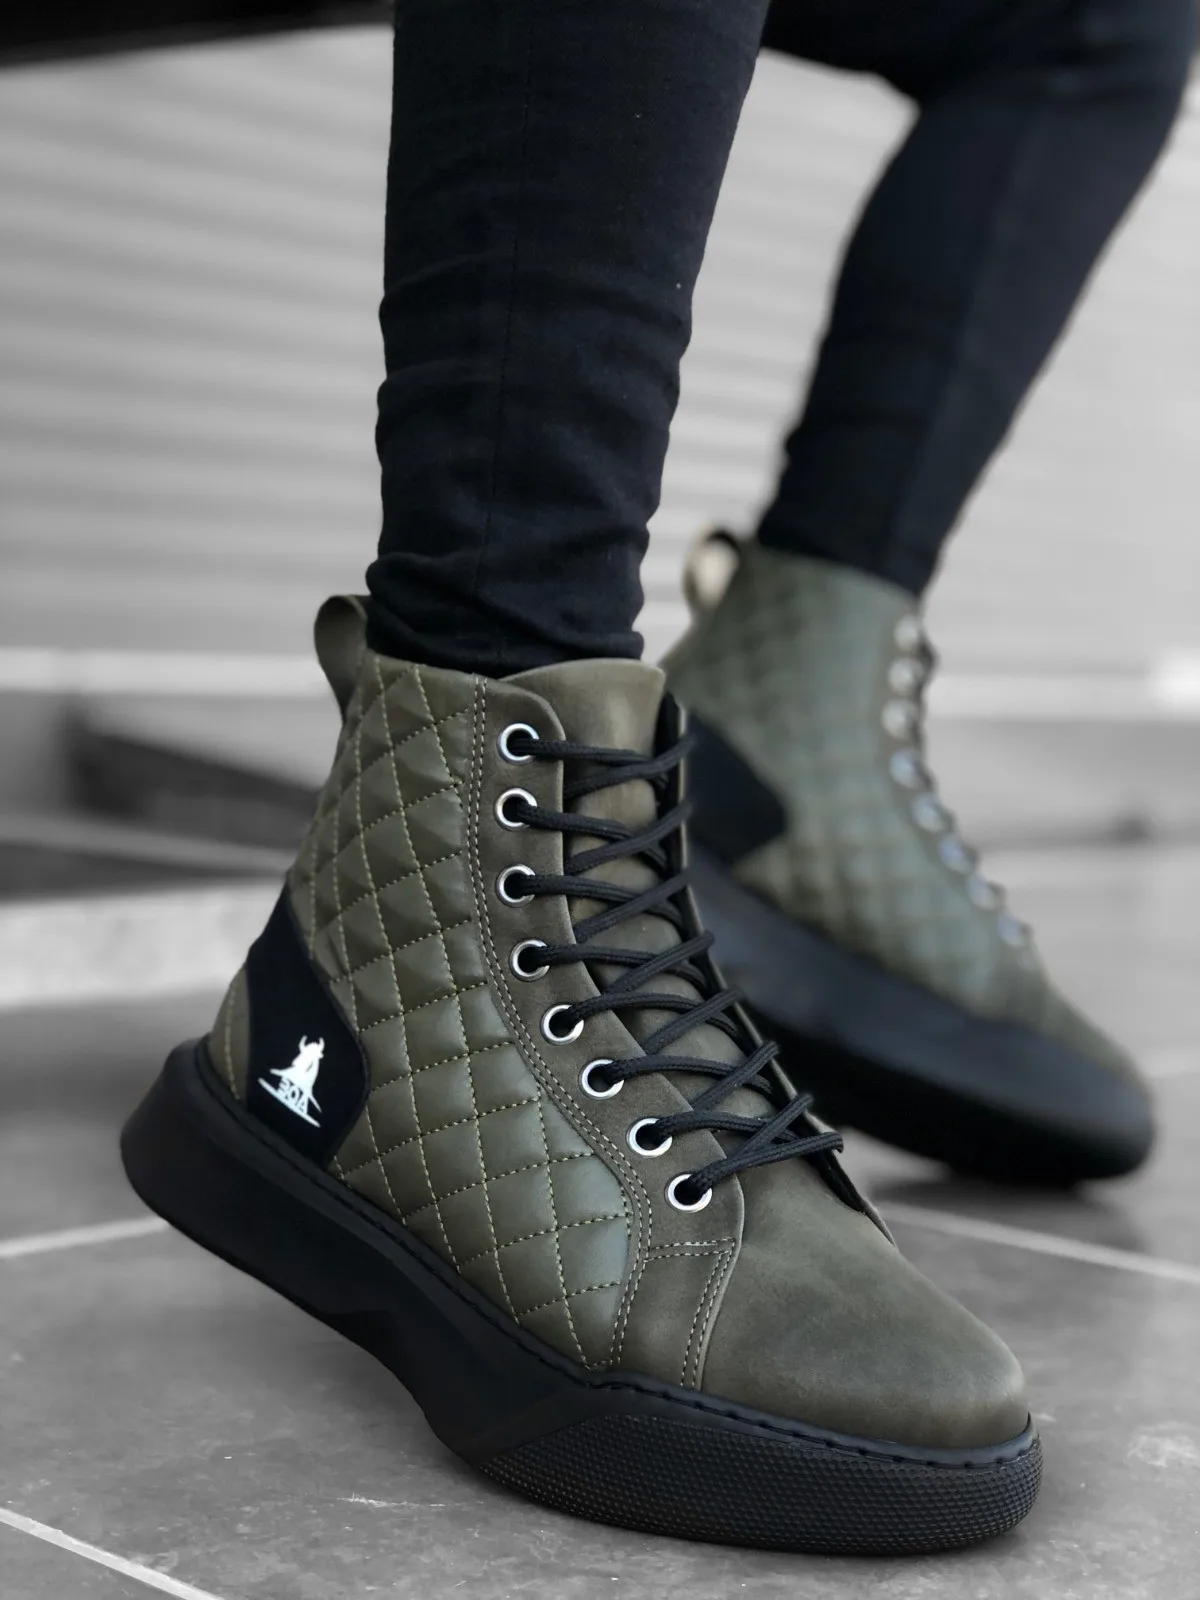 

Men's Boots New Season Sneakers Casual High Sole White Luxury Brand Trendy Faux Leather Comfortable Lightweight Hiking Tennis Zapatillas Hombre Chaussures d'été Pour Hommes BA0159 Khaki-Black